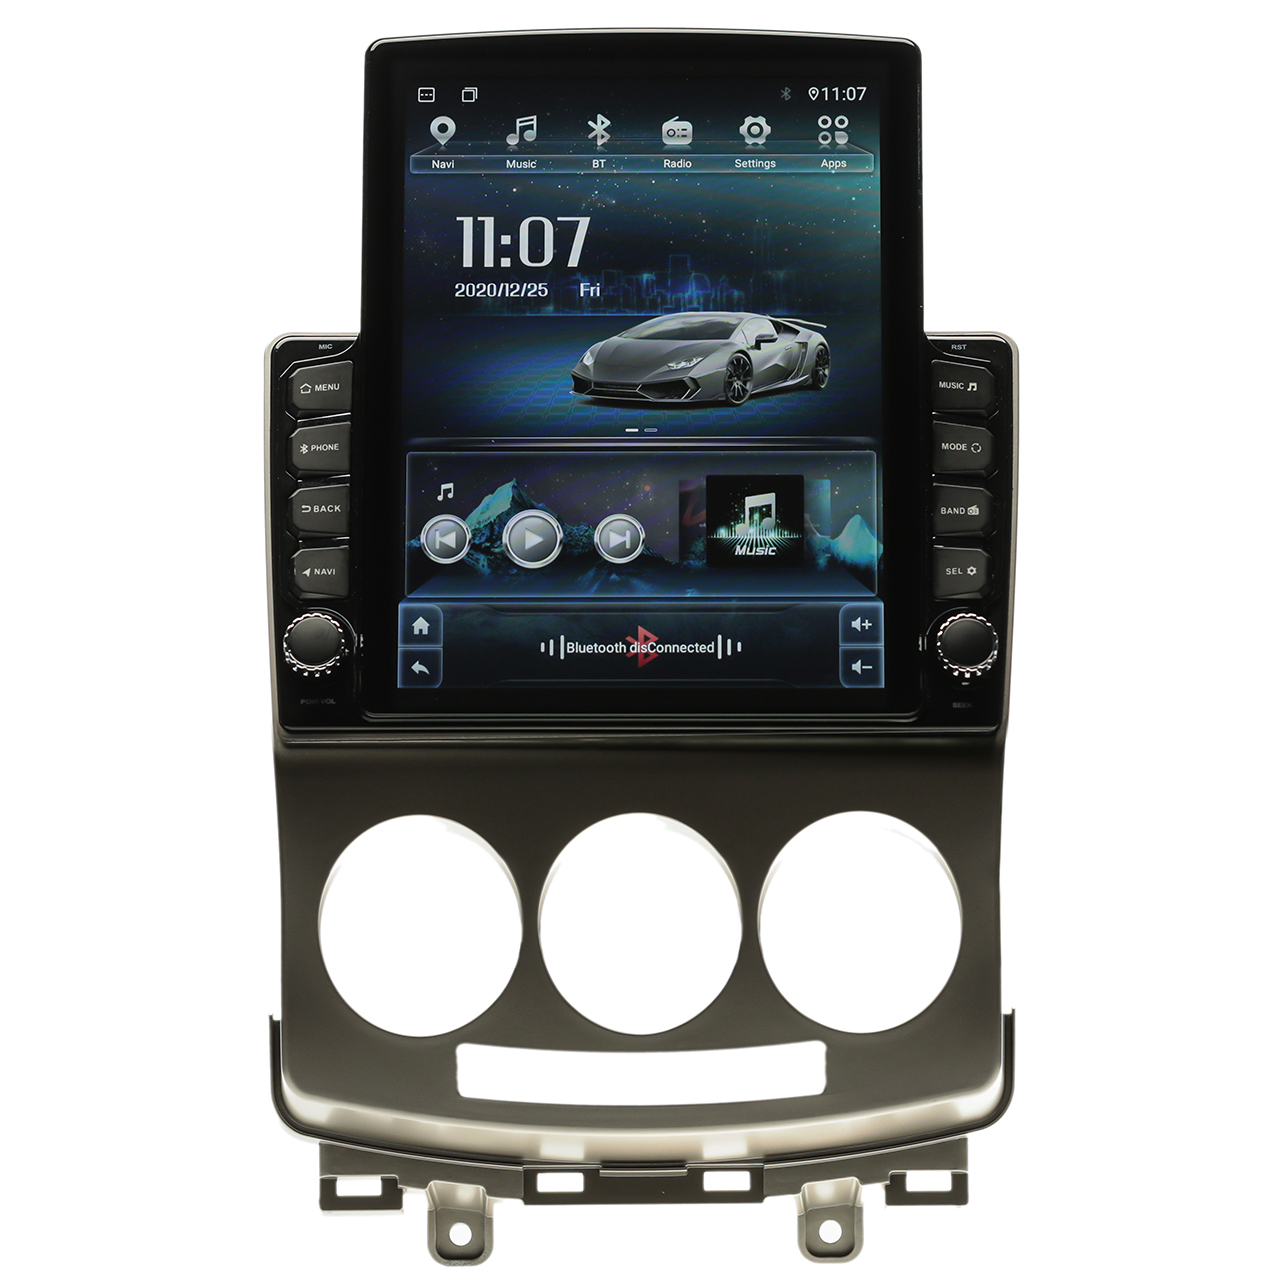 Navigatie AUTONAV ECO Android GPS Dedicata Mazda 5 2004-2010, Model XPERT Memorie 16GB Stocare, 1GB DDR3 RAM, Butoane Si Volum Fizice, Display Vertical Stil Tesla 10